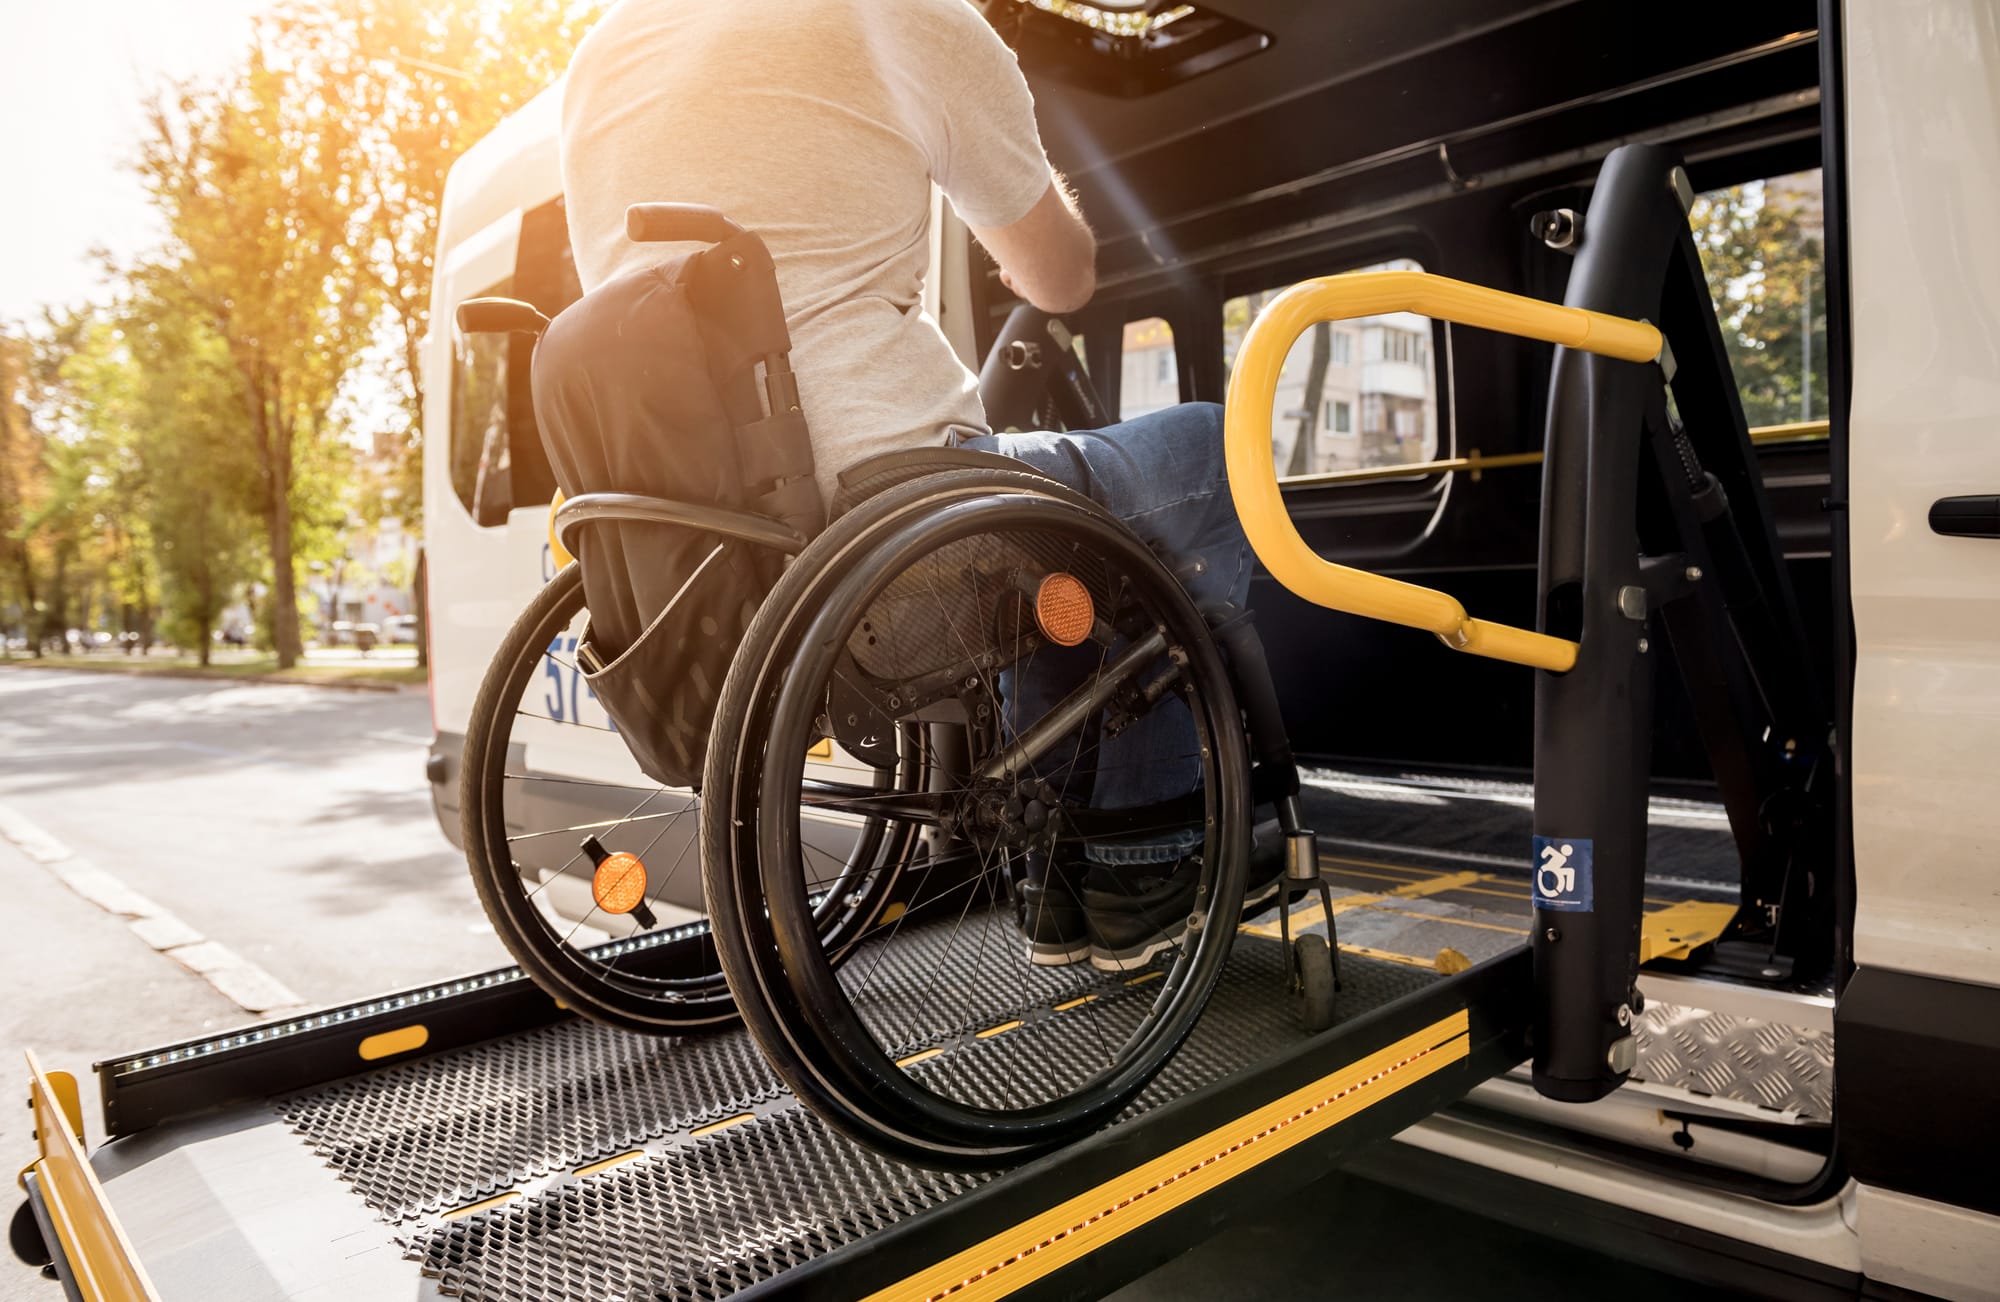 Wheelchair user getting in a van via accessible ramp